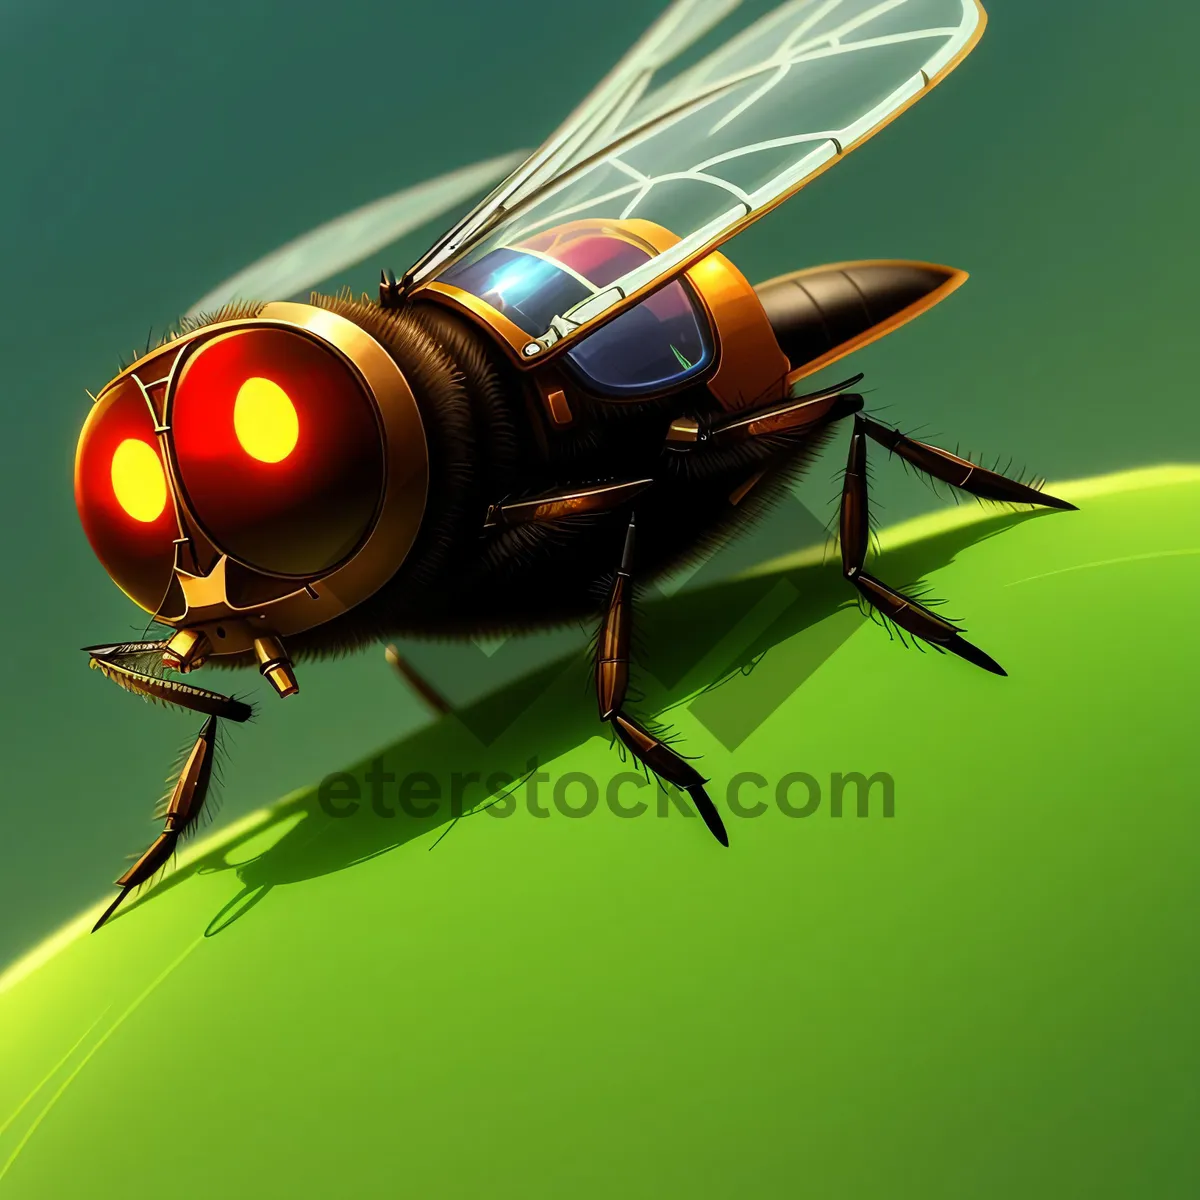 Picture of Vibrant Ladybug on Green Leaf